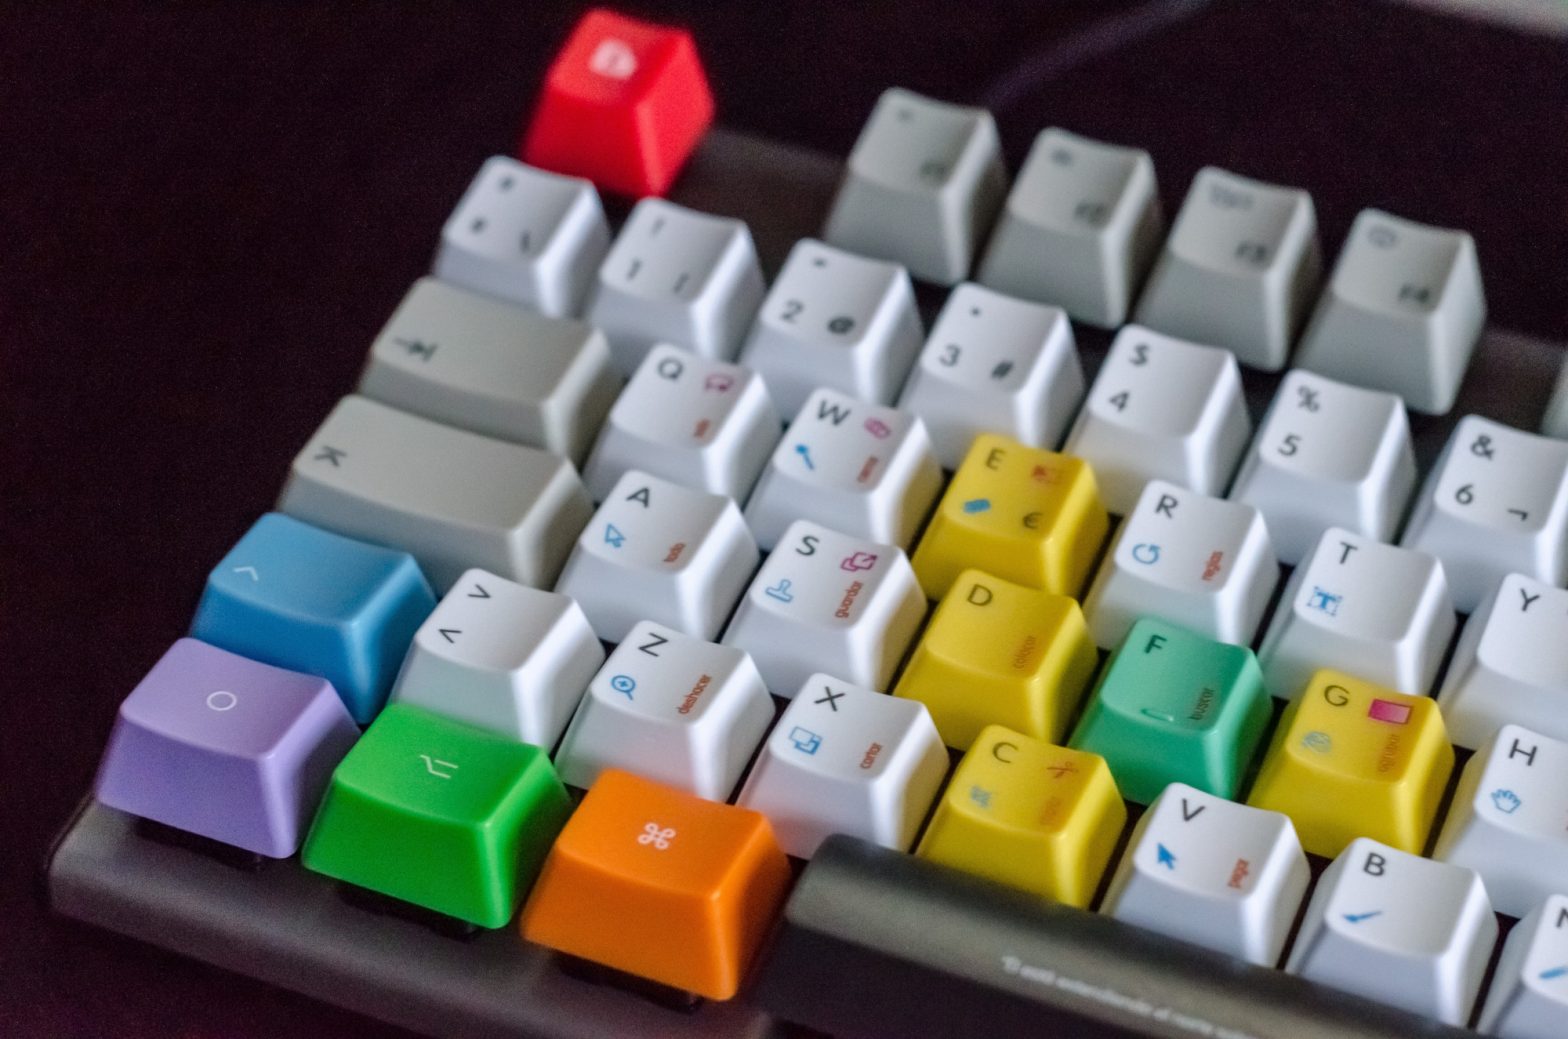 Custom keyboard with coloured keycaps